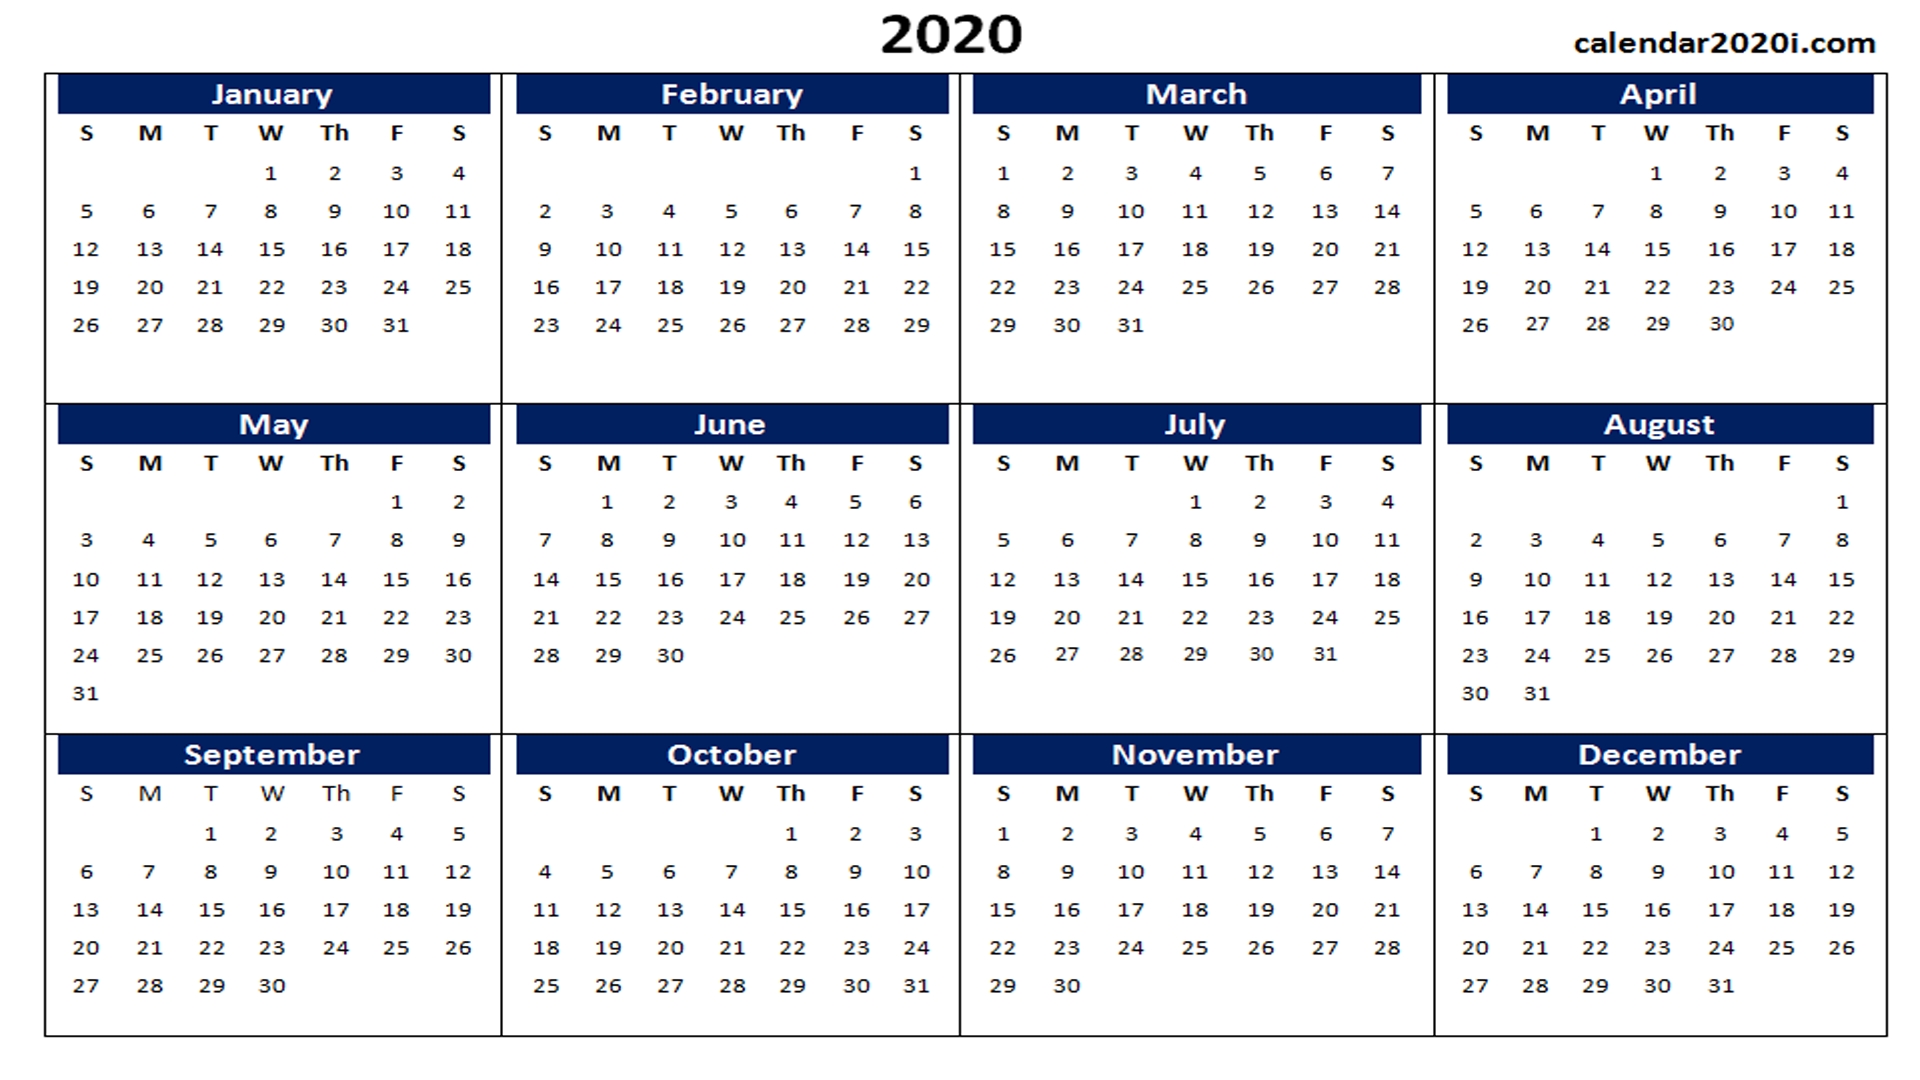 2020 Calendar Wallpapers - Wallpaper Cave